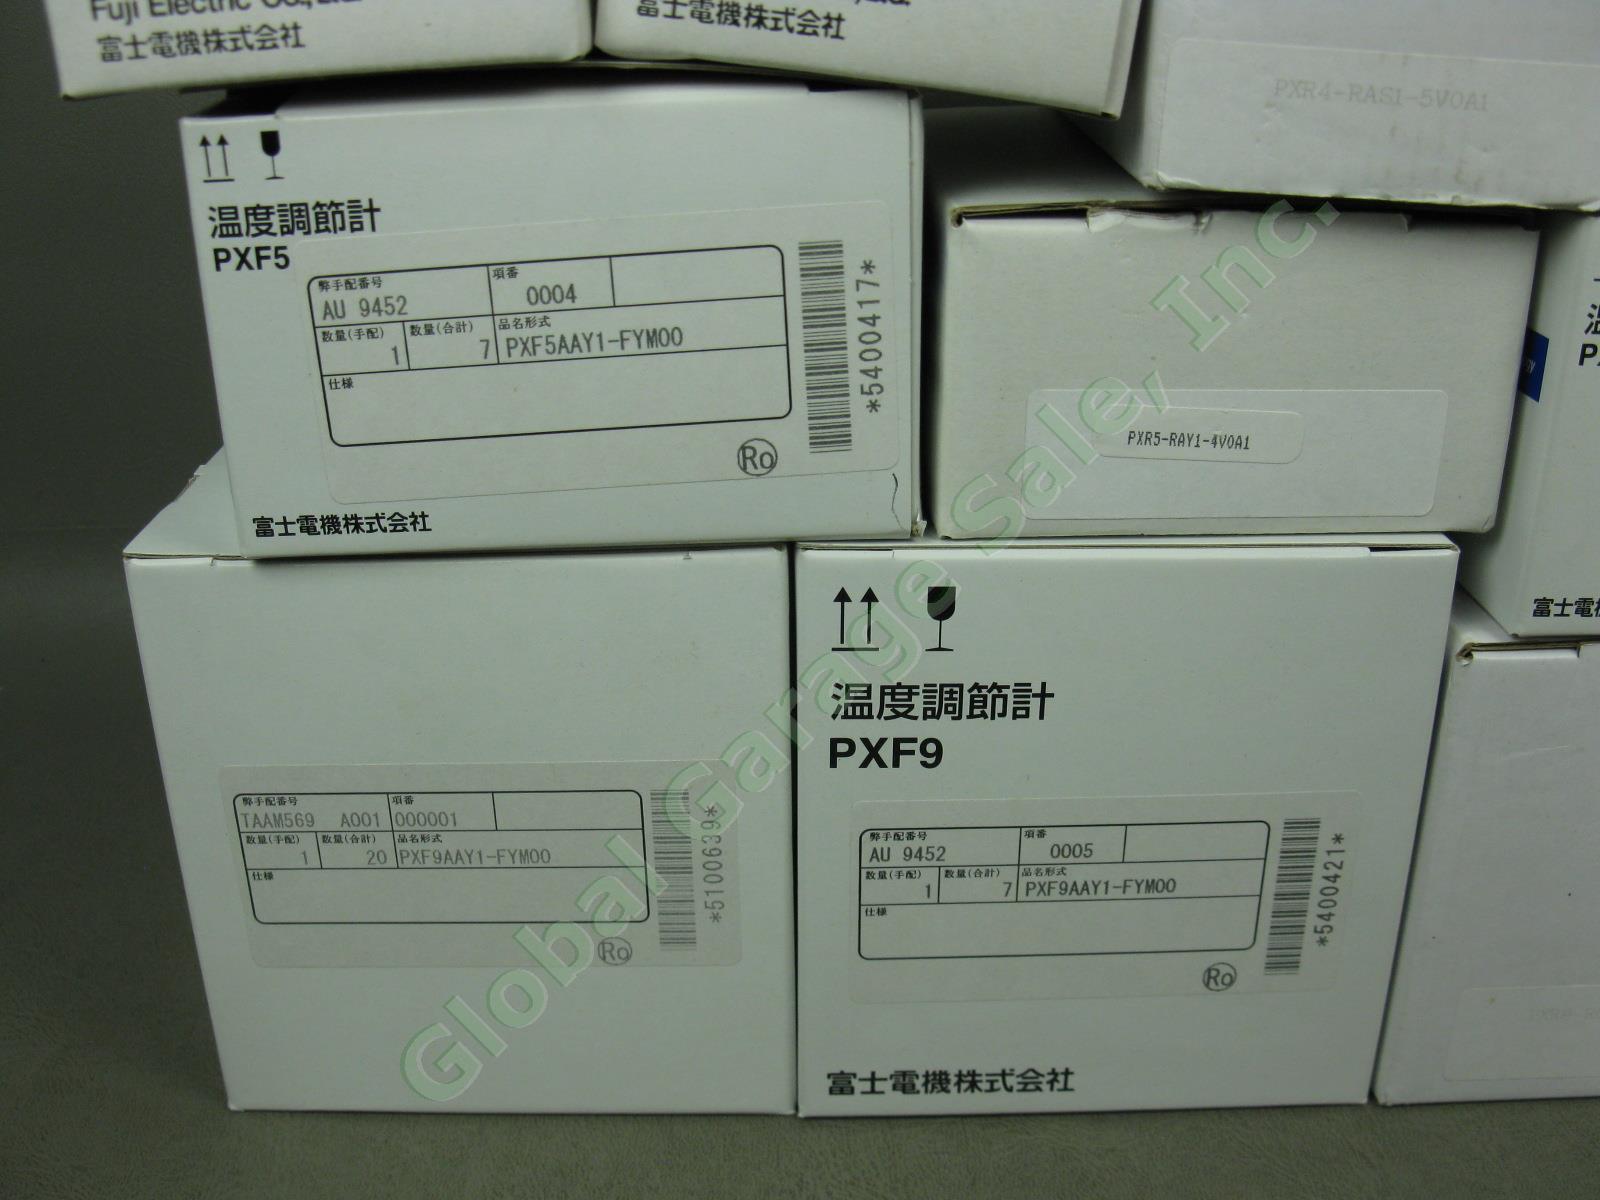 NOS LOT 13 Fuji Electric Temperature Controllers PXF4 PXF5 PXF9 PXG9 PXR4 PXR9 + 1